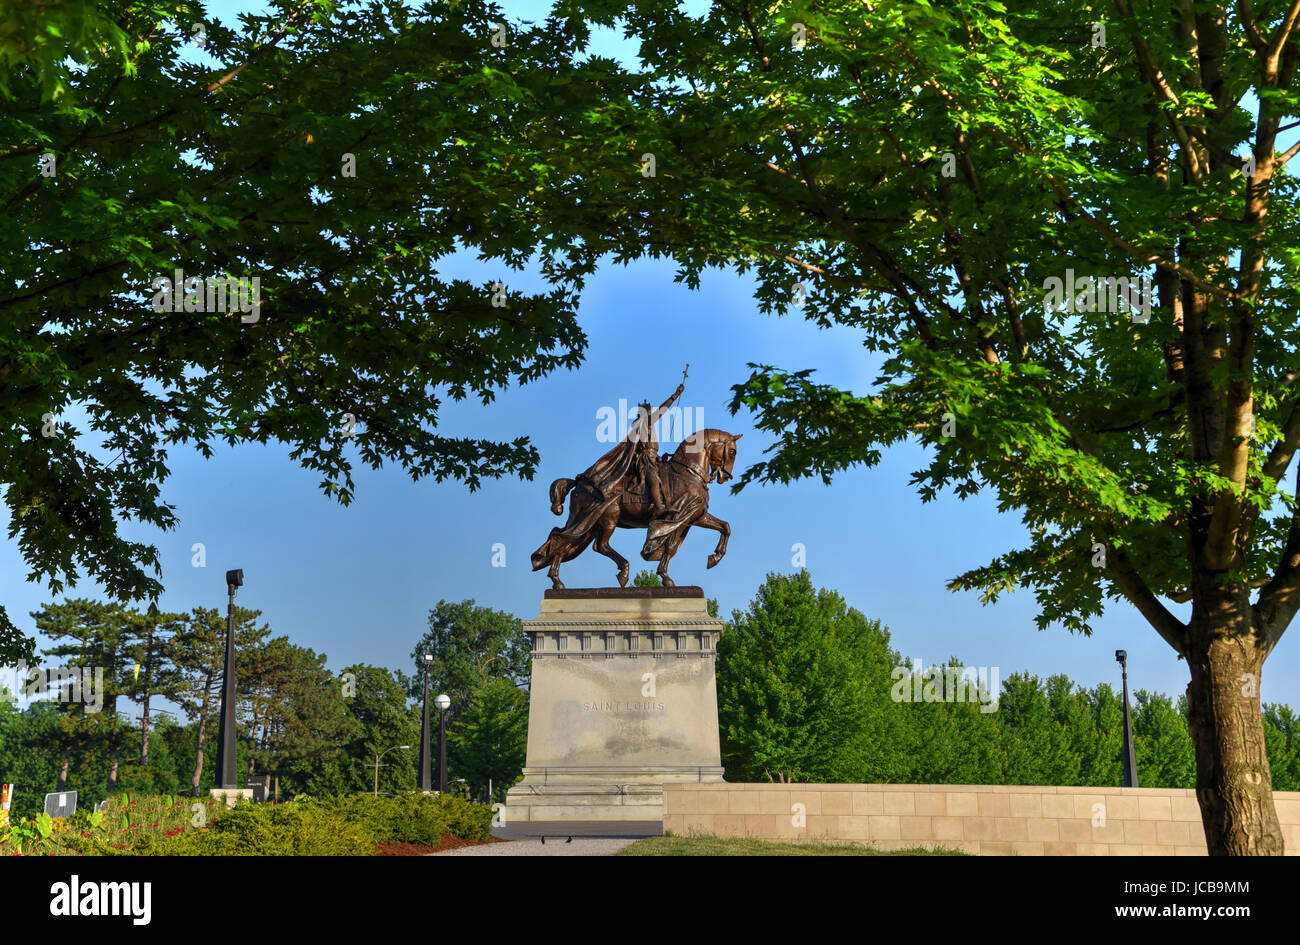 Apotheosis of St. Louis statue of King Louis IX of France, namesake of St. Louis, Missouri in Forest Park, St. Louis, Missouri. Stock Photo